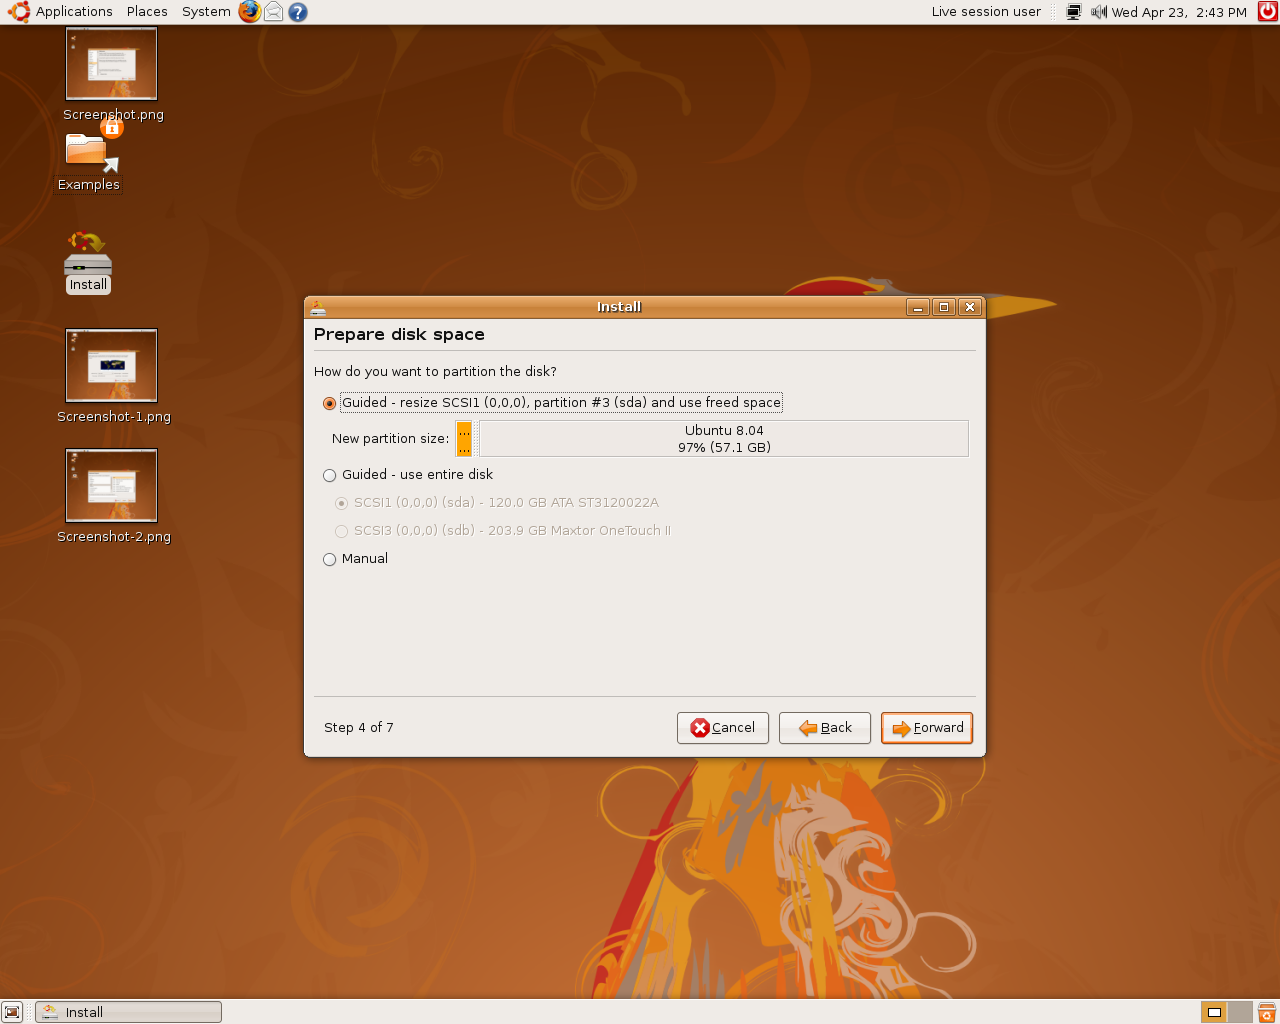 Eee PC Ubuntu Install